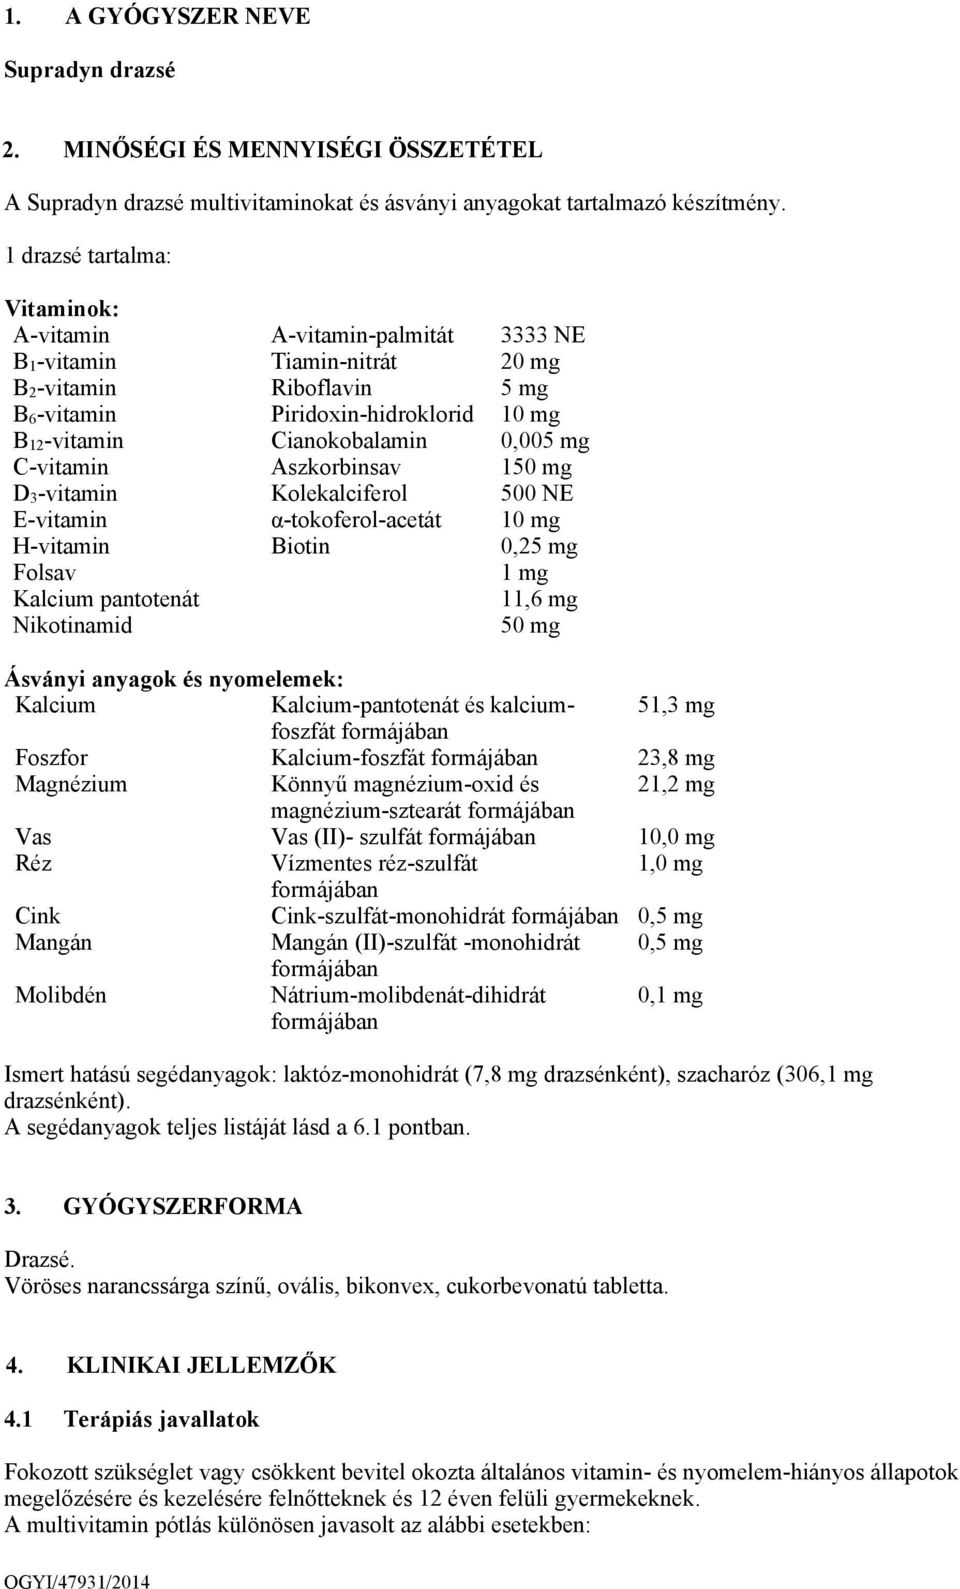 0,005 mg C-vitamin Aszkorbinsav 150 mg D 3 -vitamin Kolekalciferol 500 NE E-vitamin α-tokoferol-acetát 10 mg H-vitamin Biotin 0,25 mg Folsav 1 mg Kalcium pantotenát 11,6 mg Nikotinamid 50 mg Ásványi